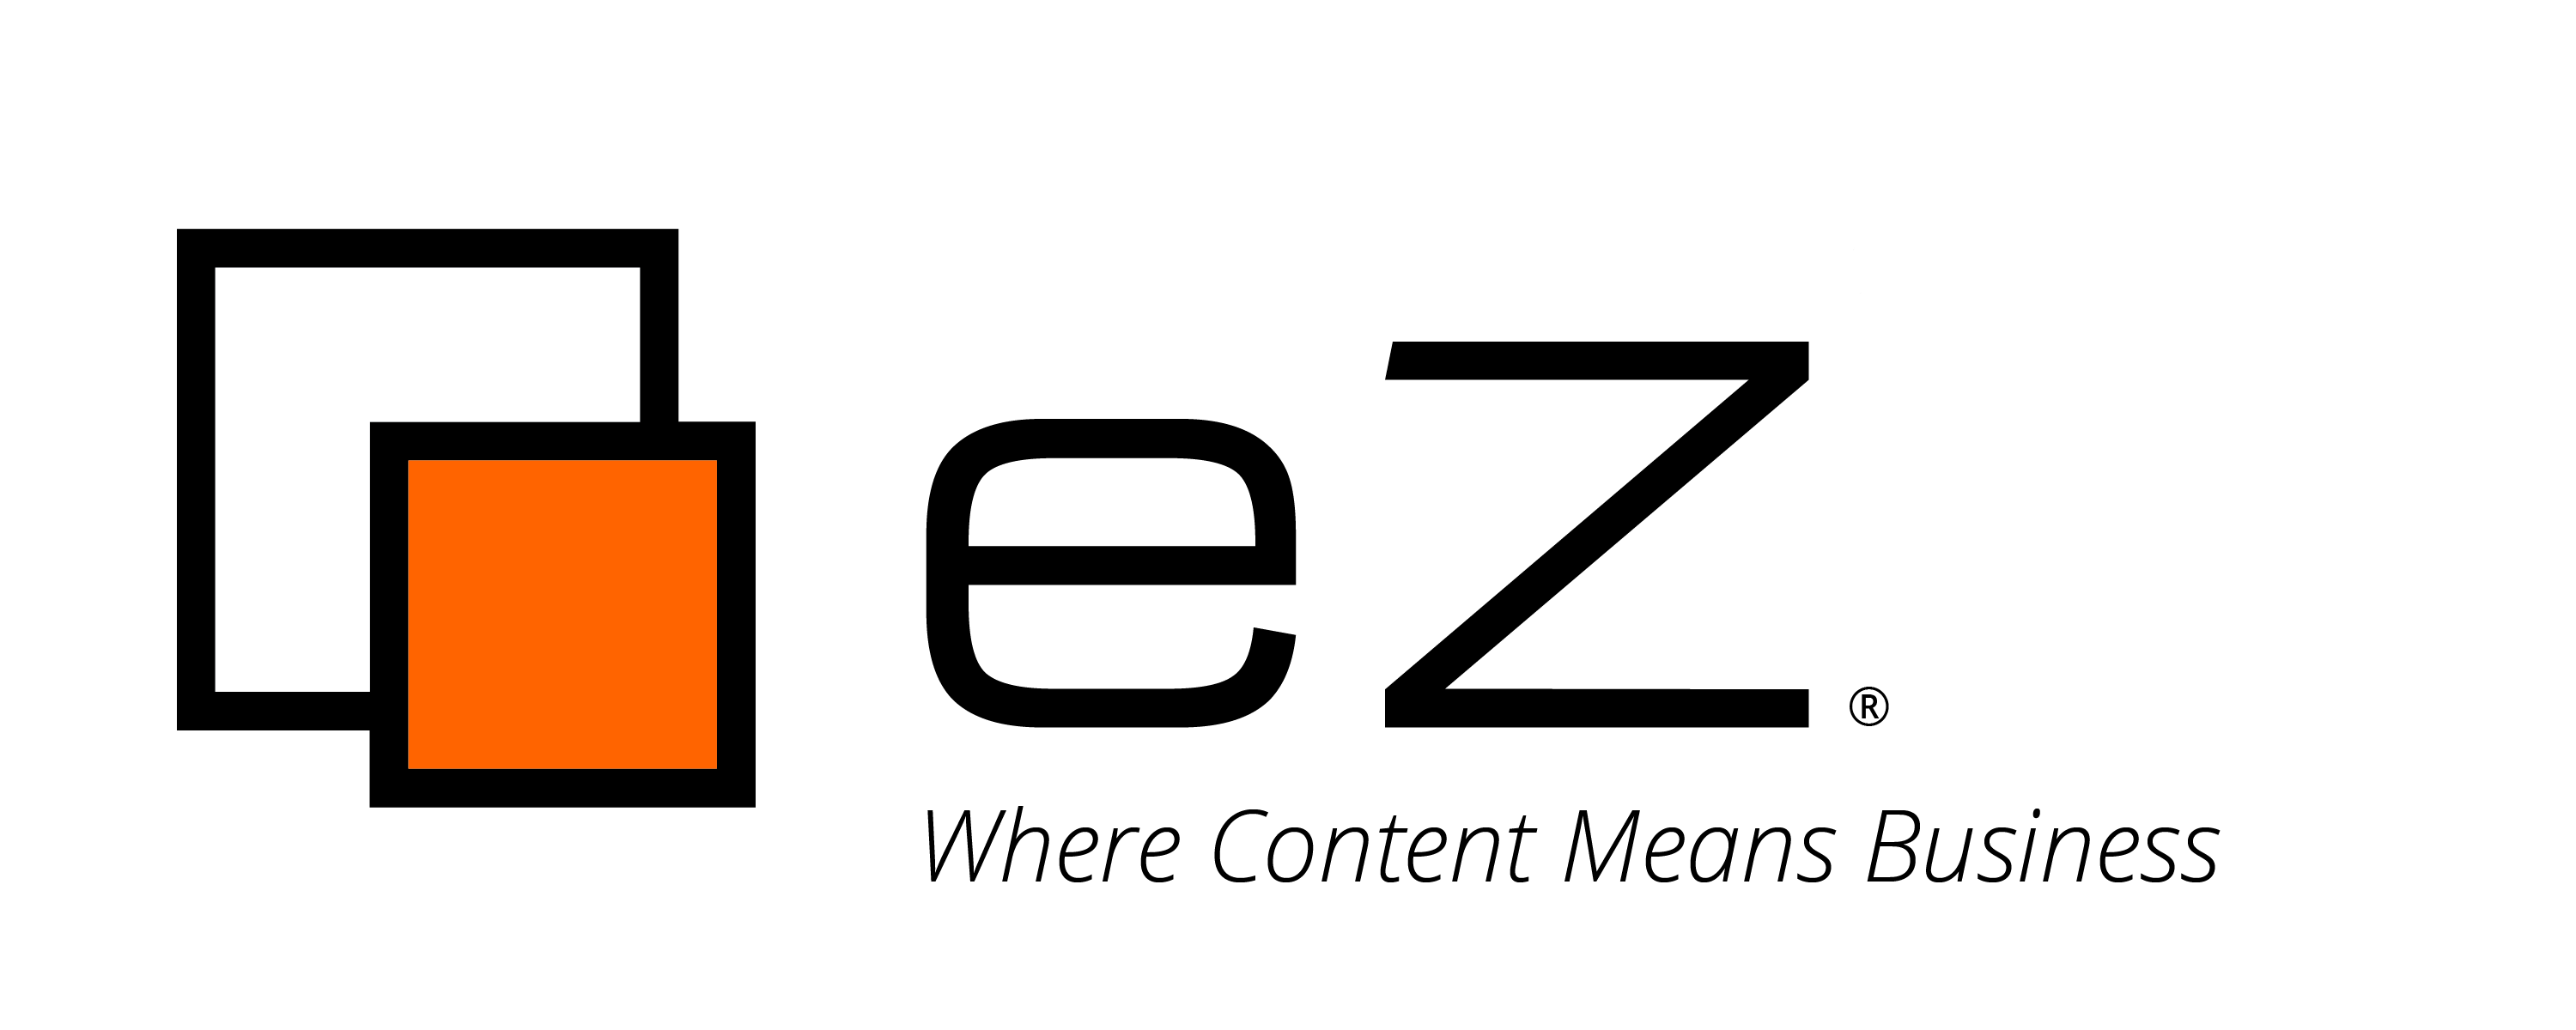 EZ Logo - LogoDix